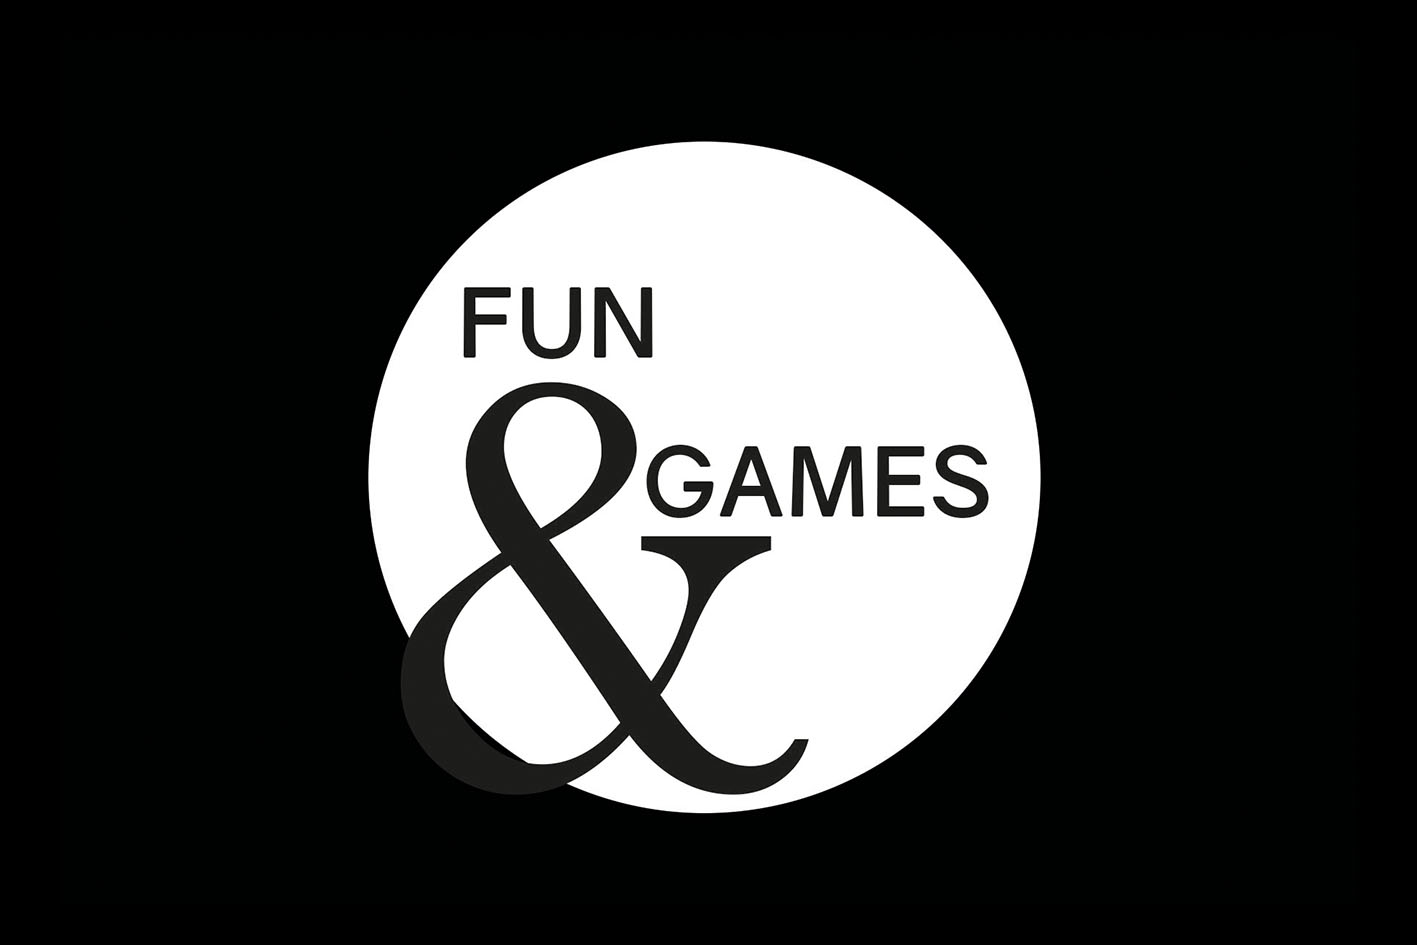 Fun and games logo